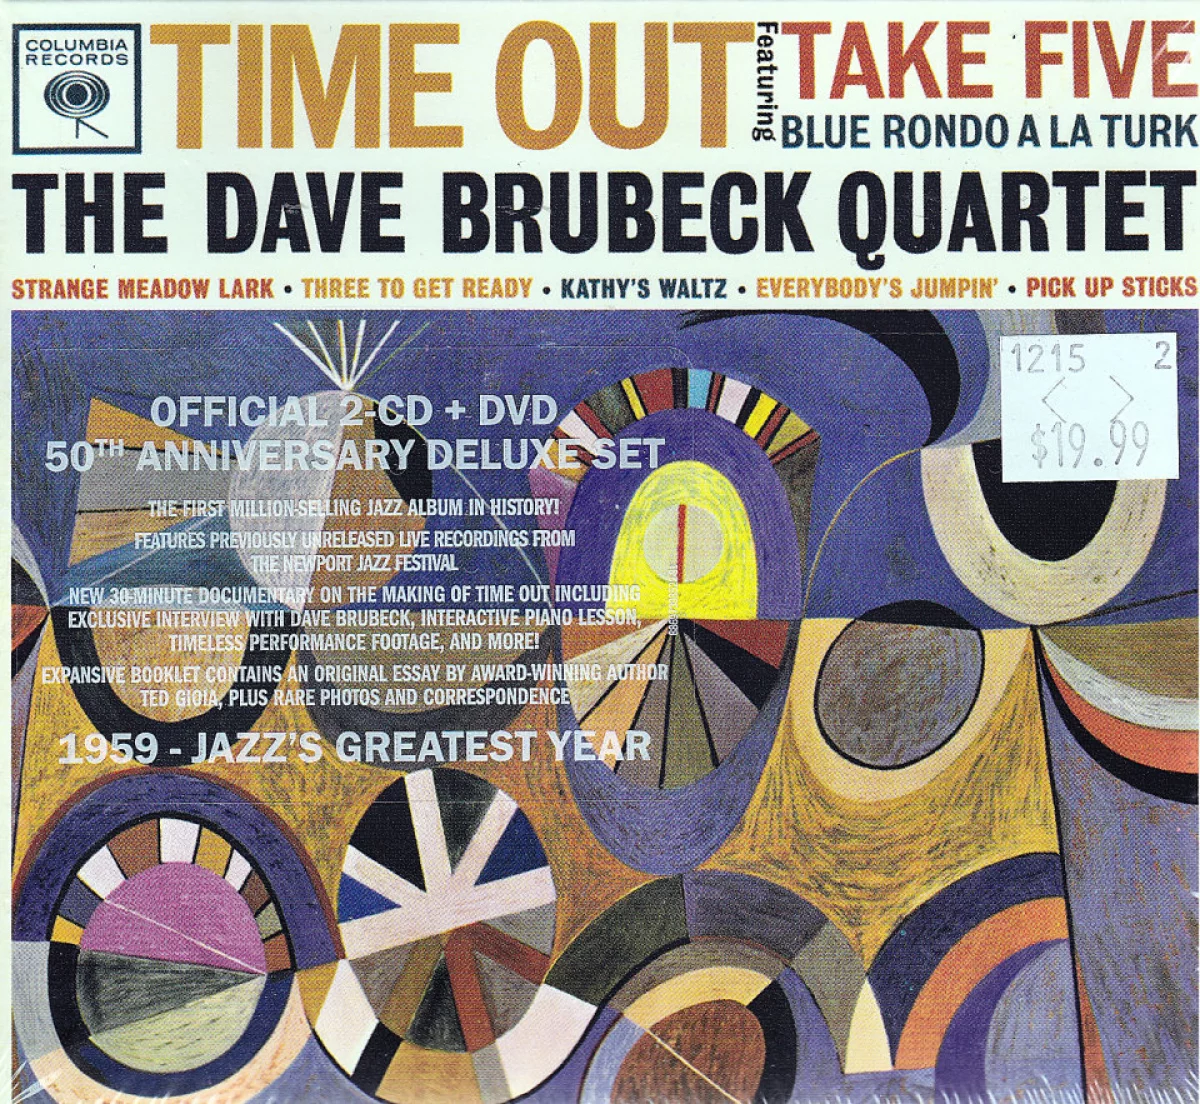 The Dave Brubeck Quartet CD, 1959 at Wolfgang's